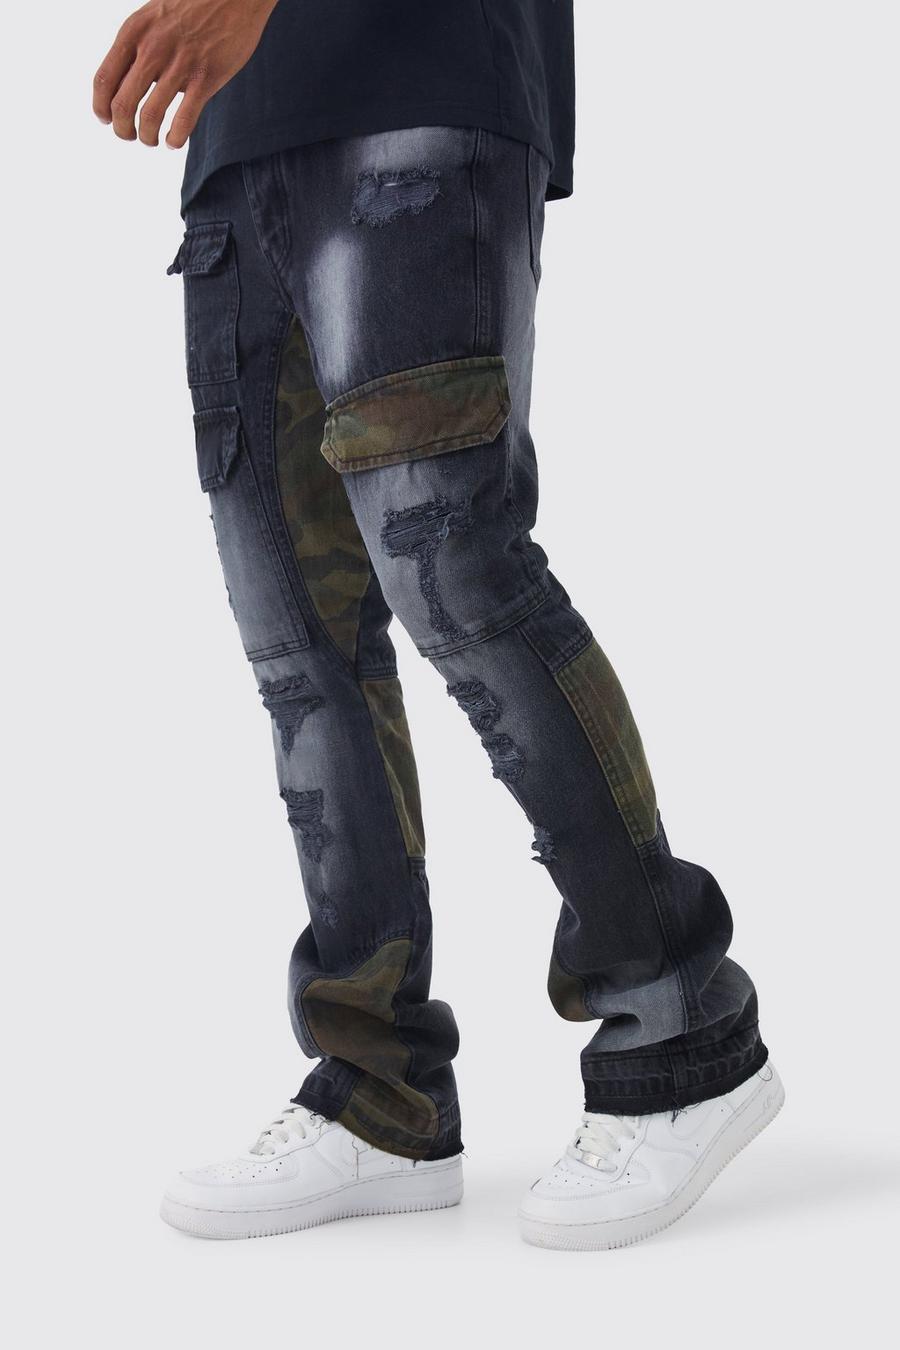 Jeans Cargo Slim Fit in denim rigido in fantasia militare con rattoppi, Washed black image number 1